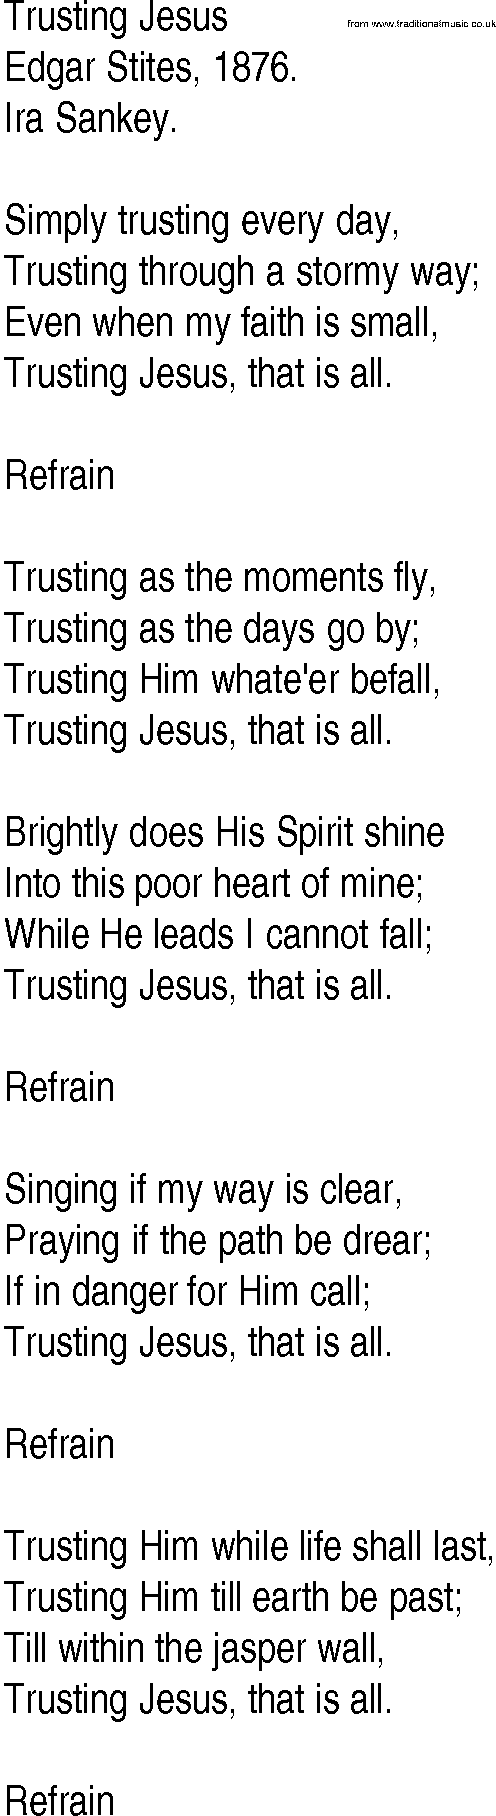 Hymn and Gospel Song: Trusting Jesus by Edgar Stites lyrics